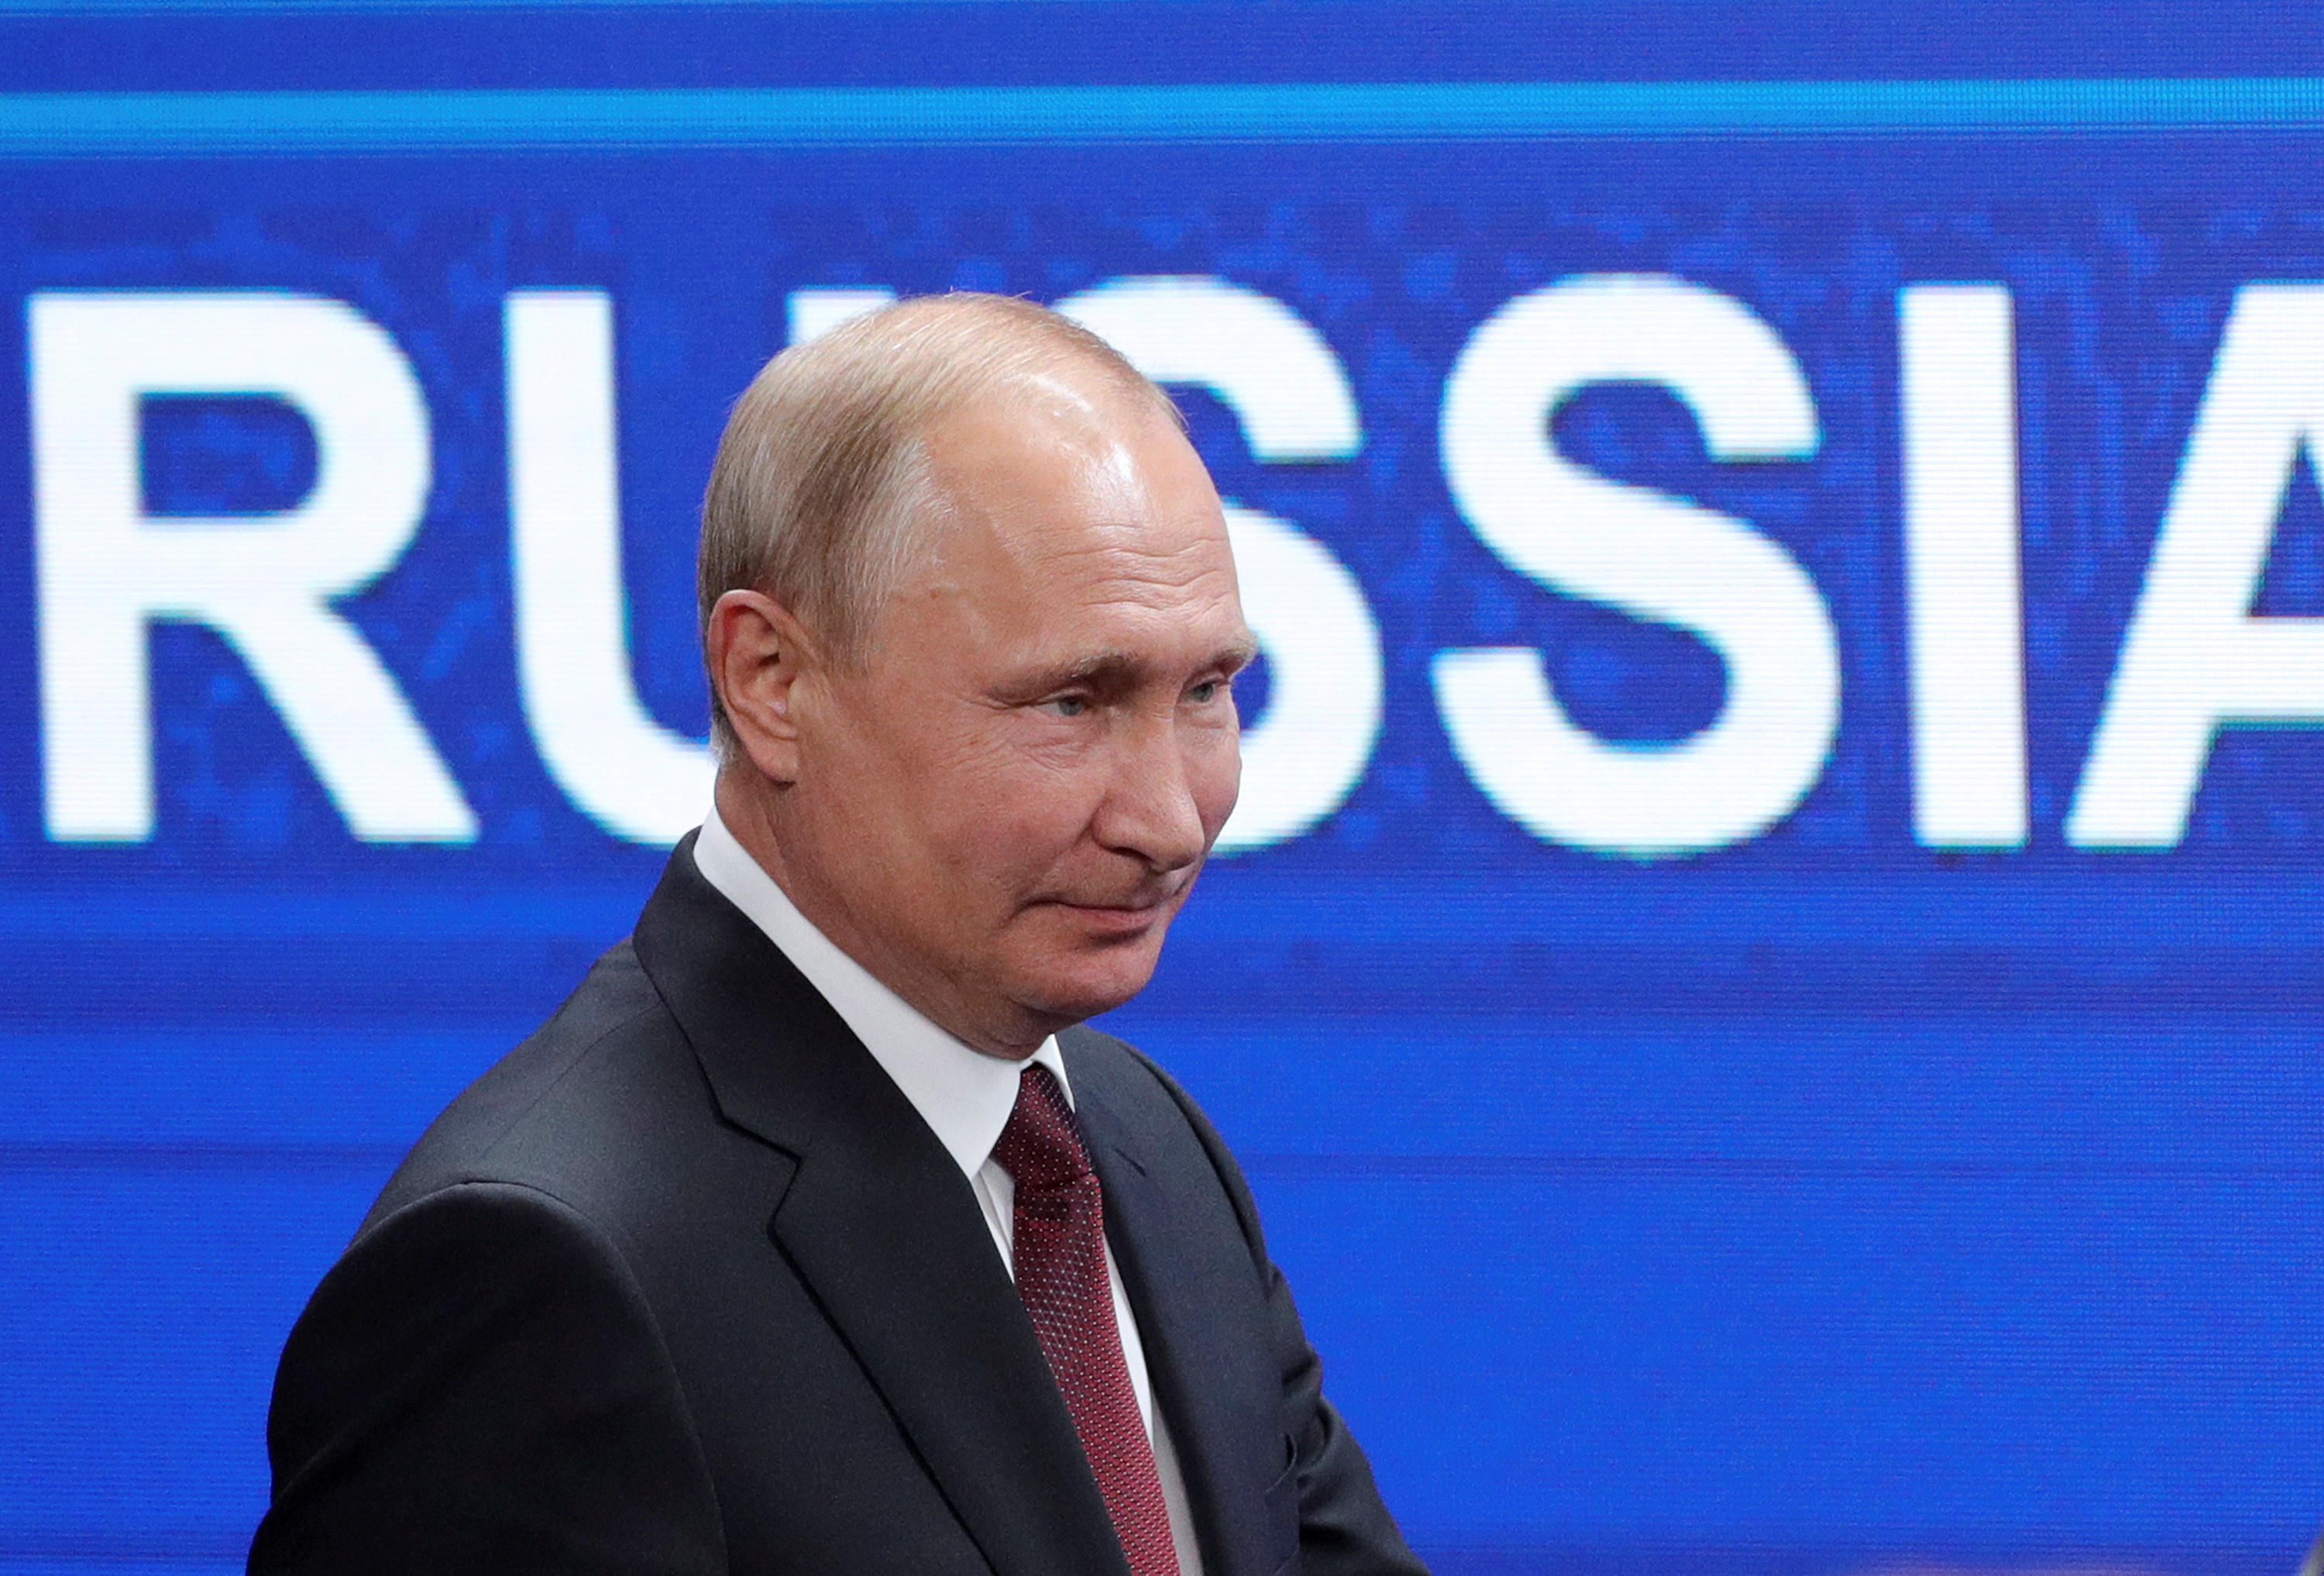 Putin says he'll observe term limits preventing 2024 presidential run